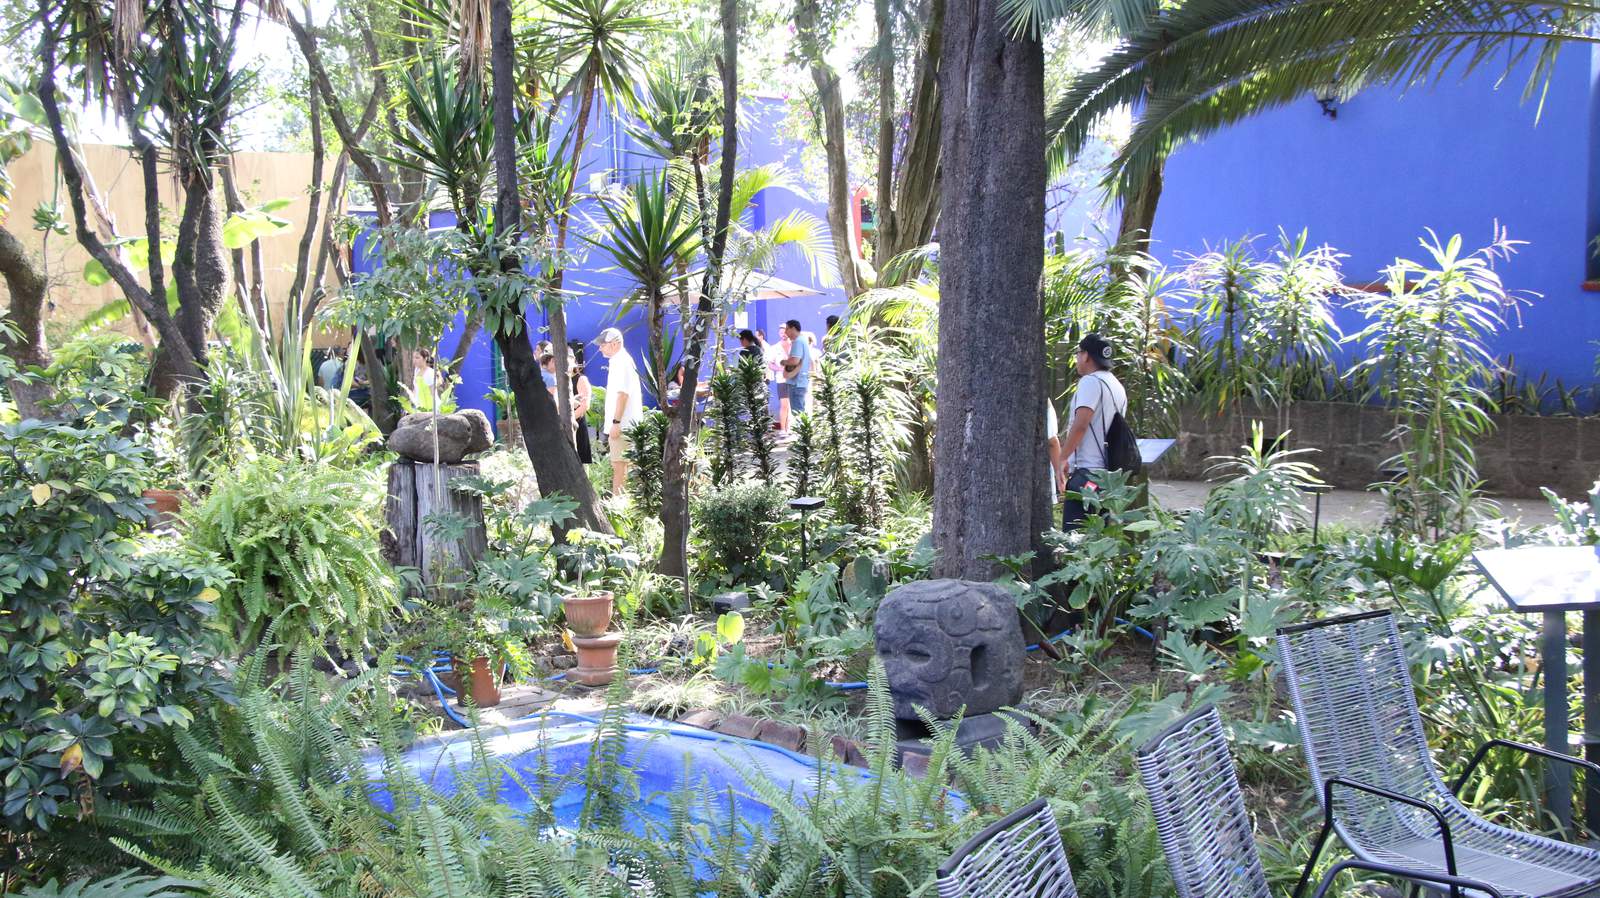 Open-air Frida Kahlo exhibit will make its world debut at San Antonio Botanical Garden this spring